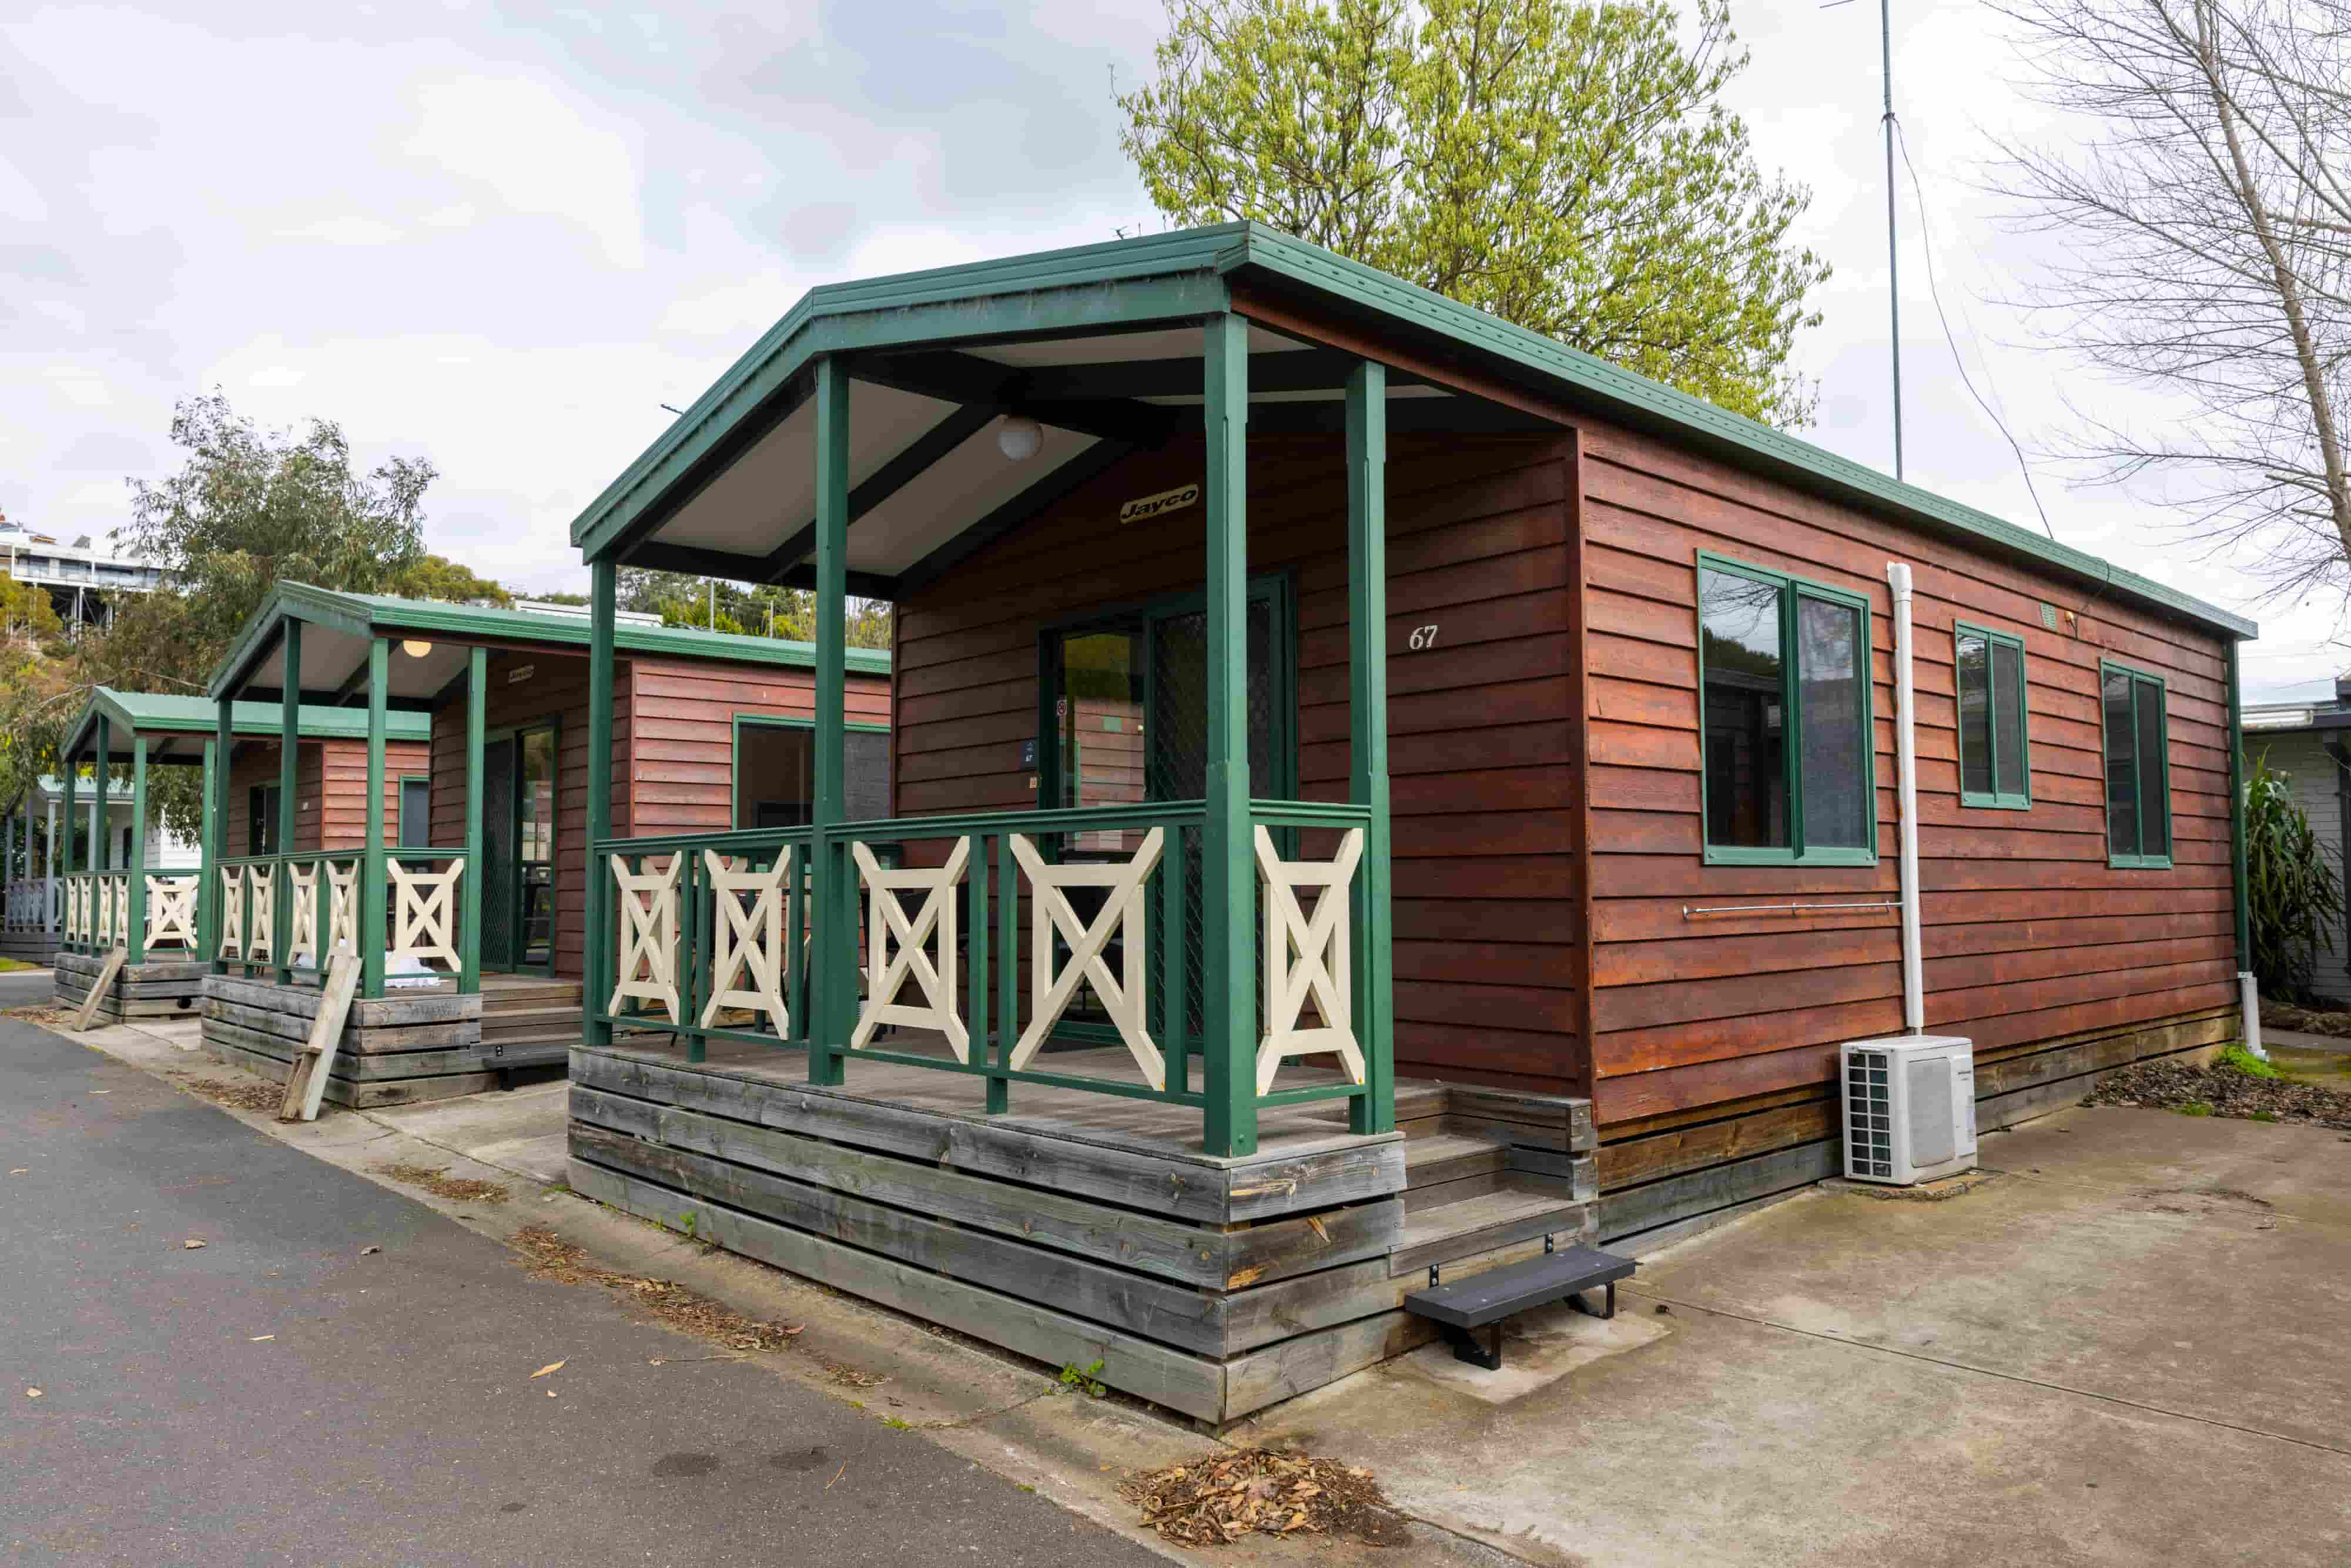 Tasman Holiday Parks cabins before being repainted